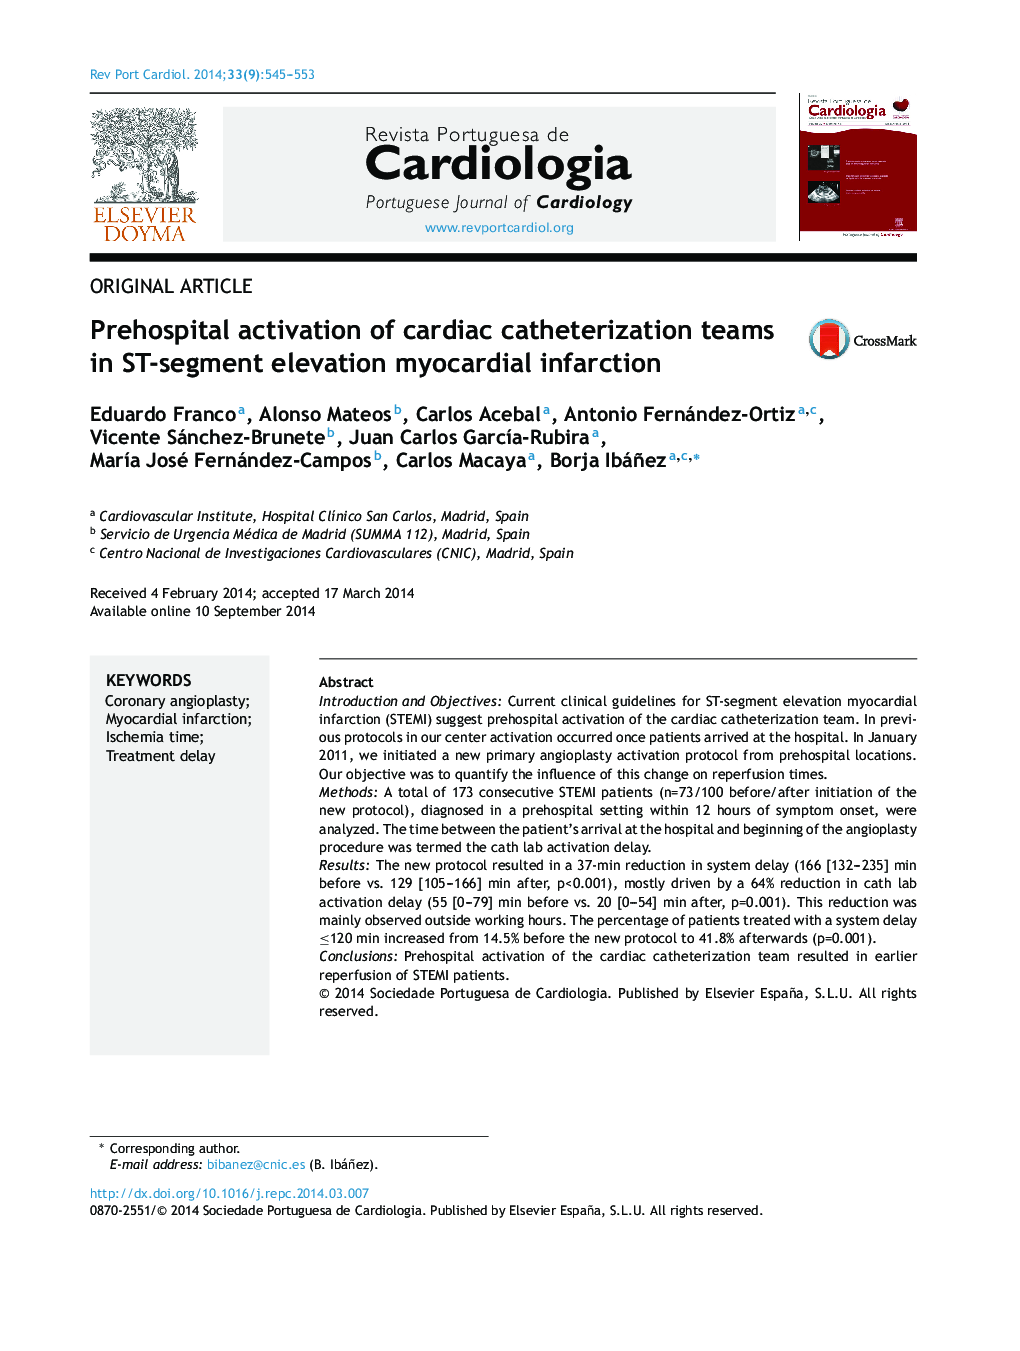 Prehospital activation of cardiac catheterization teams in ST-segment elevation myocardial infarction